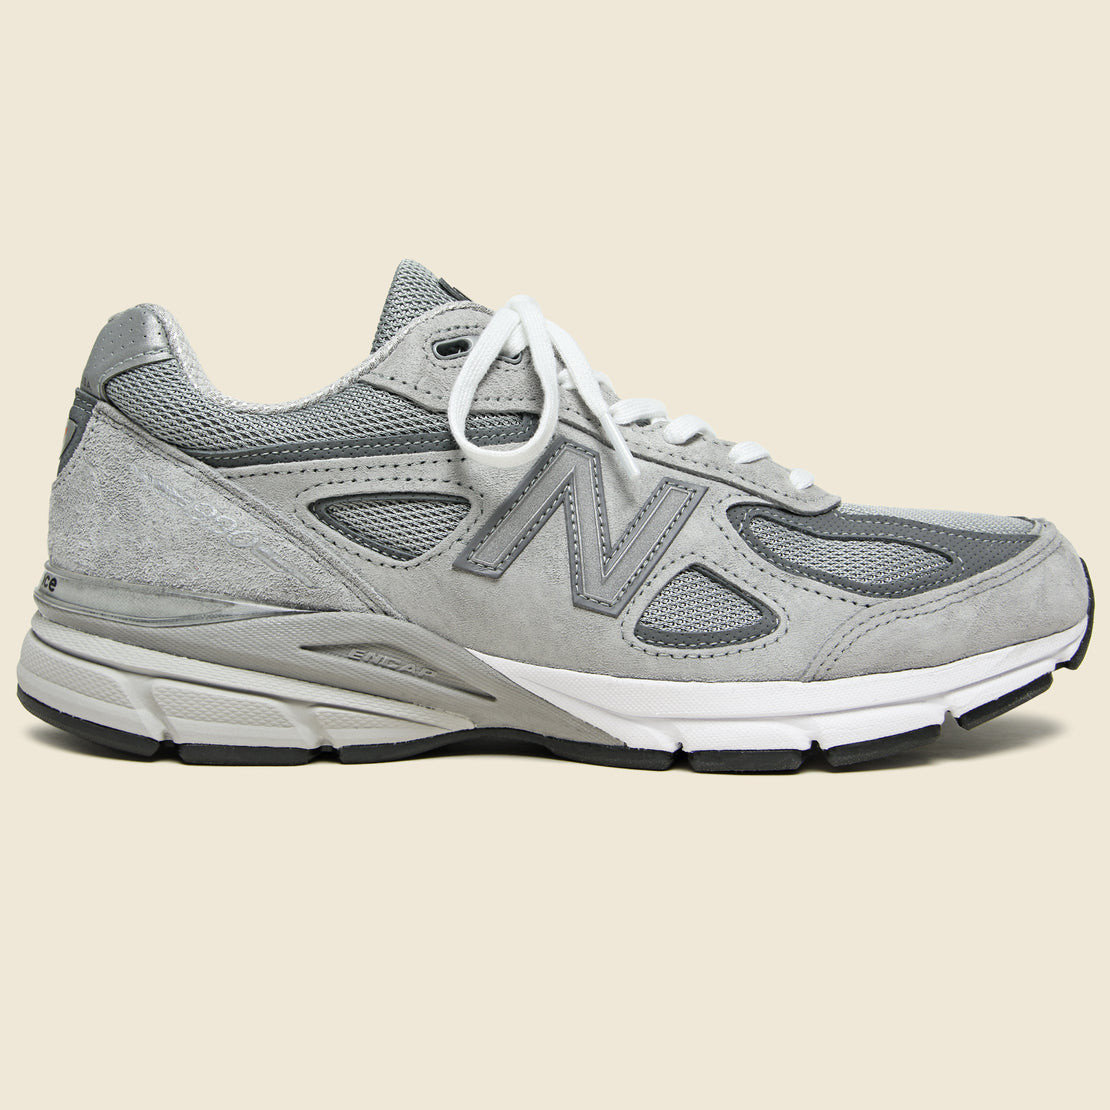 New Balance 990v4 Sneaker - Grey/Castlerock